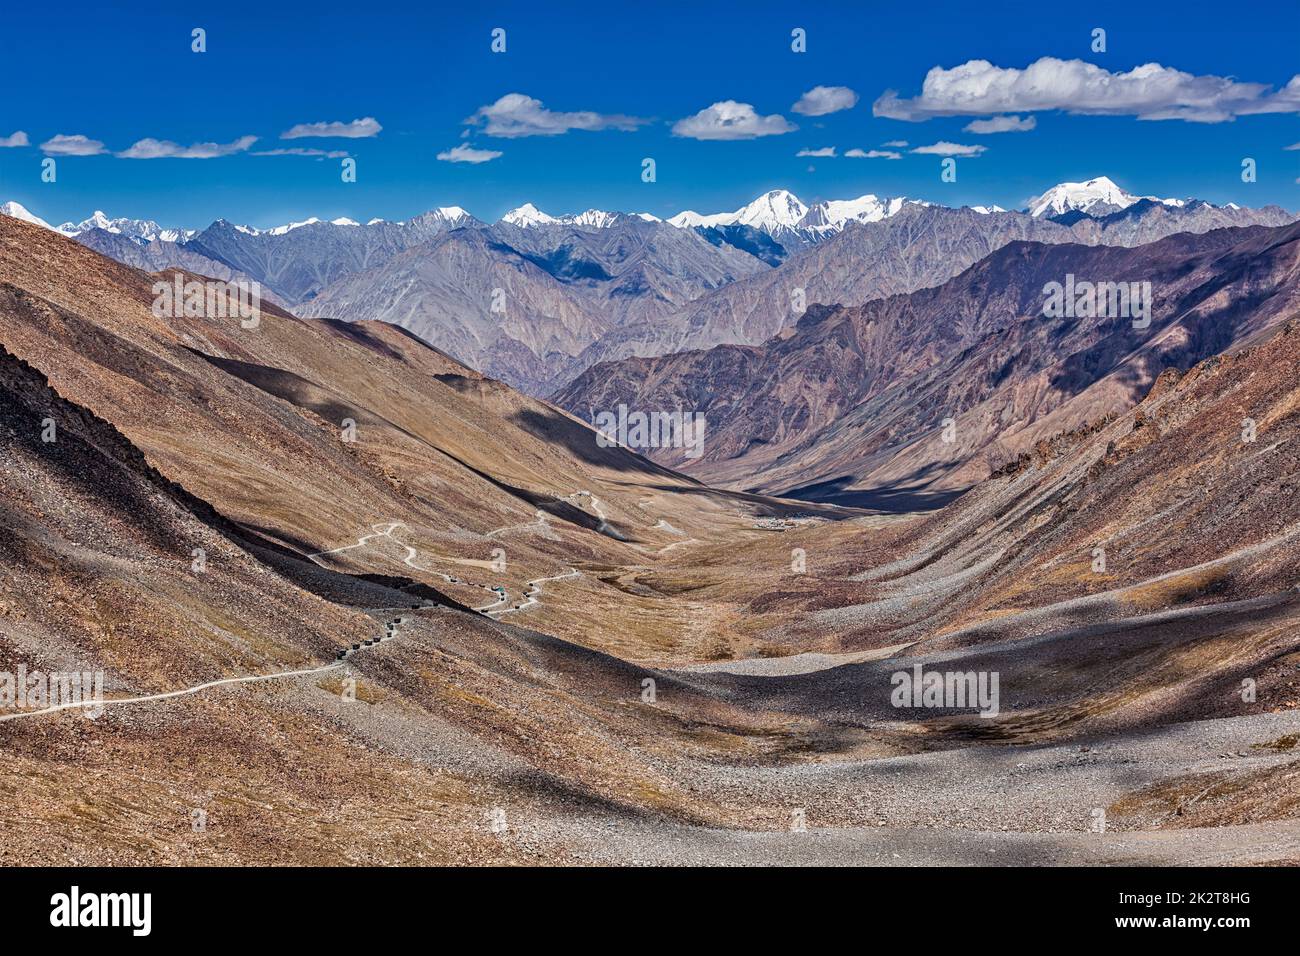 Karakorum Range and road in valley, Ladakh, India Stock Photo